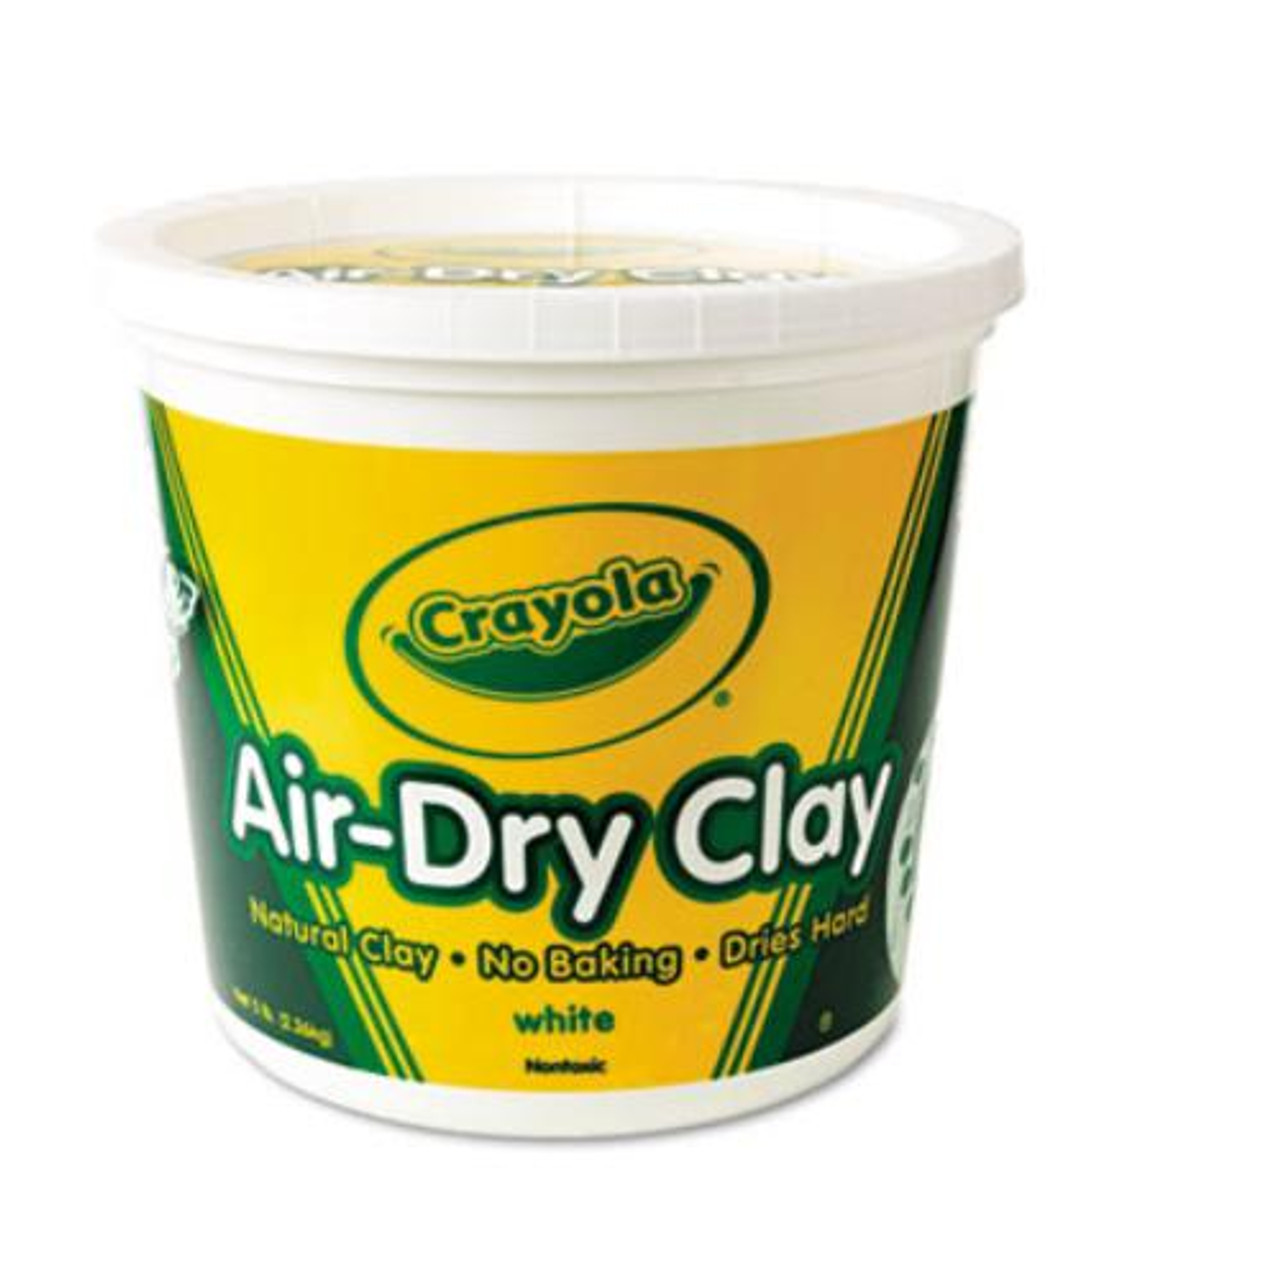 Crayola Air-dry Clay Bucket - White (575055)